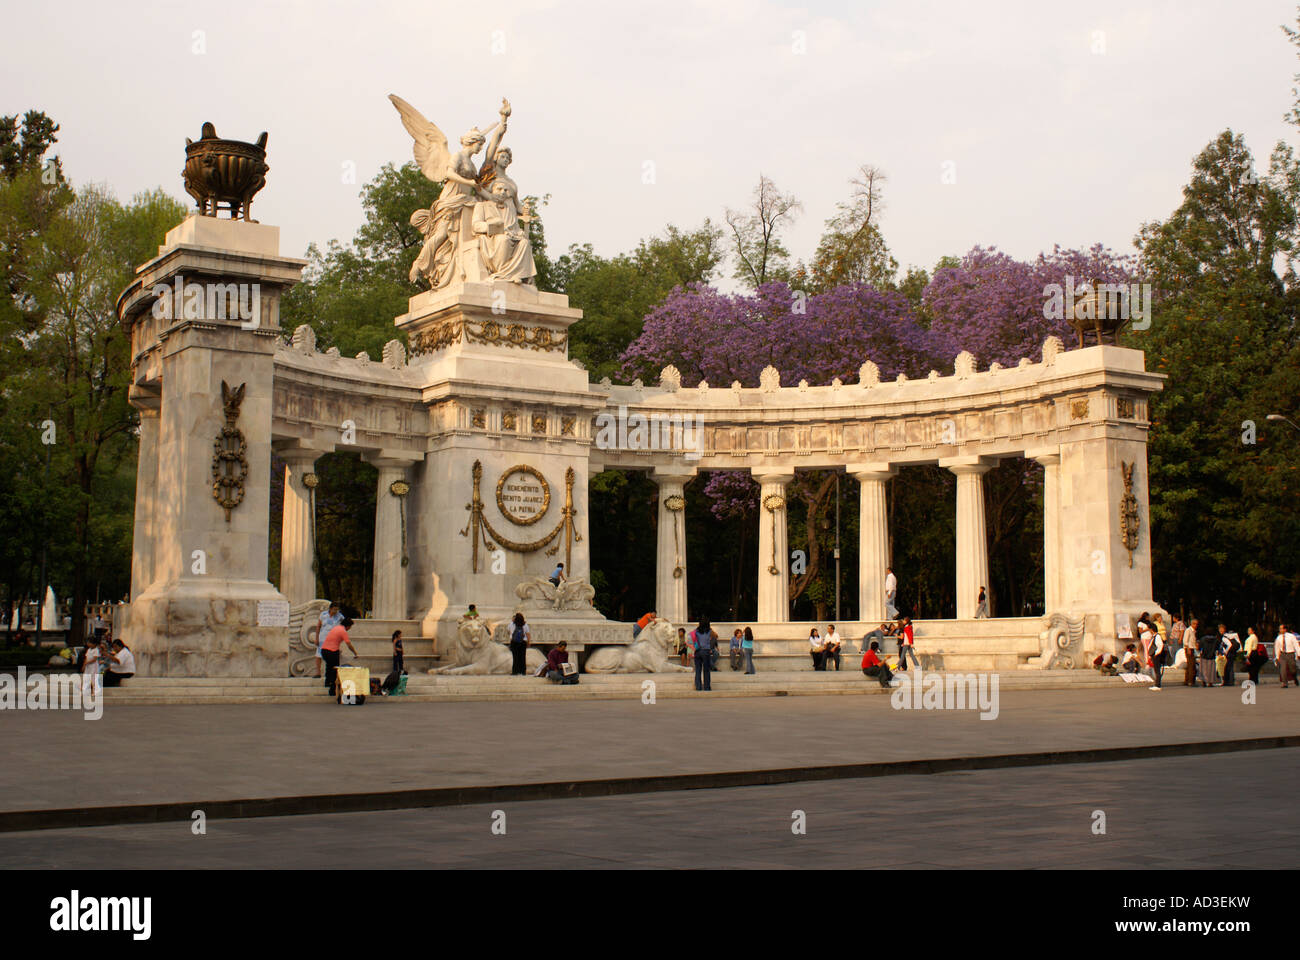 The Hemicicio a Benito Juarez monument next to the Alameda Central park, Mexico City Stock Photo